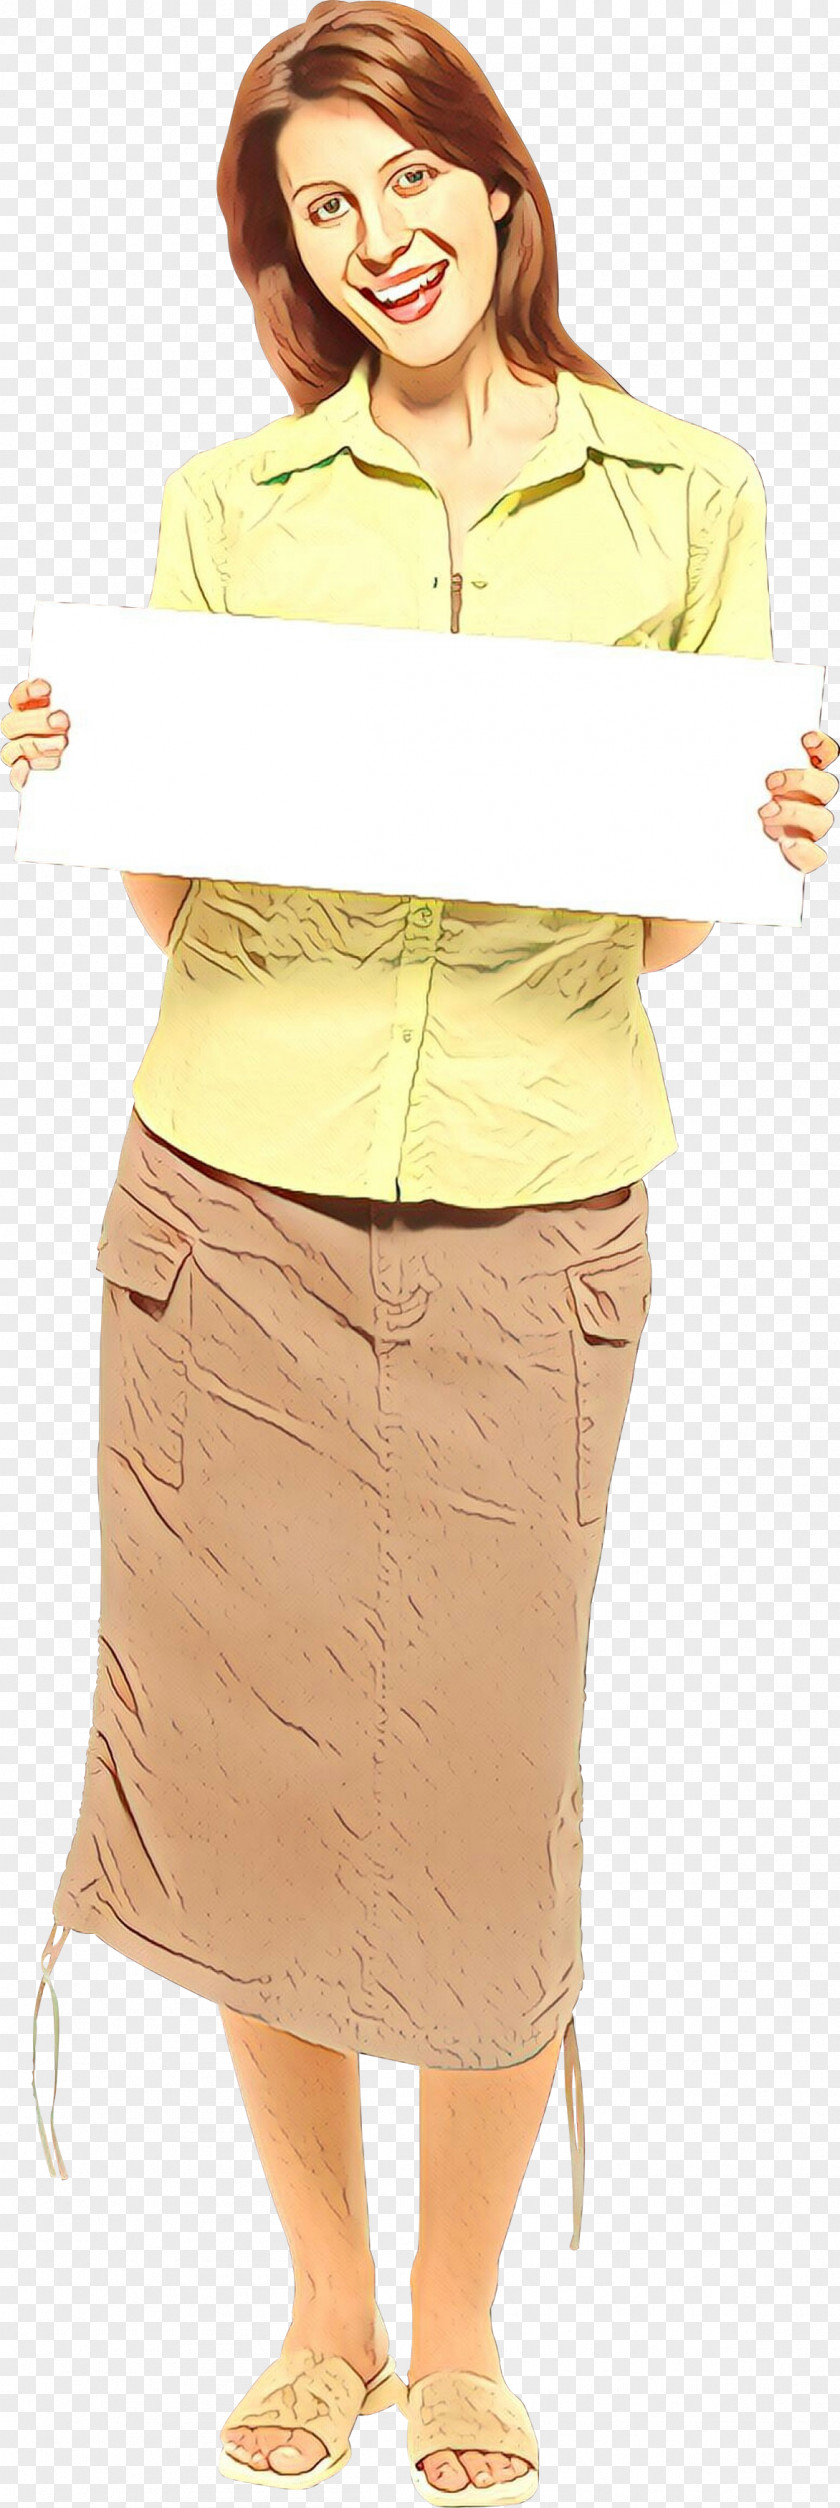 Skirt T-shirt Woman Image Illustration PNG